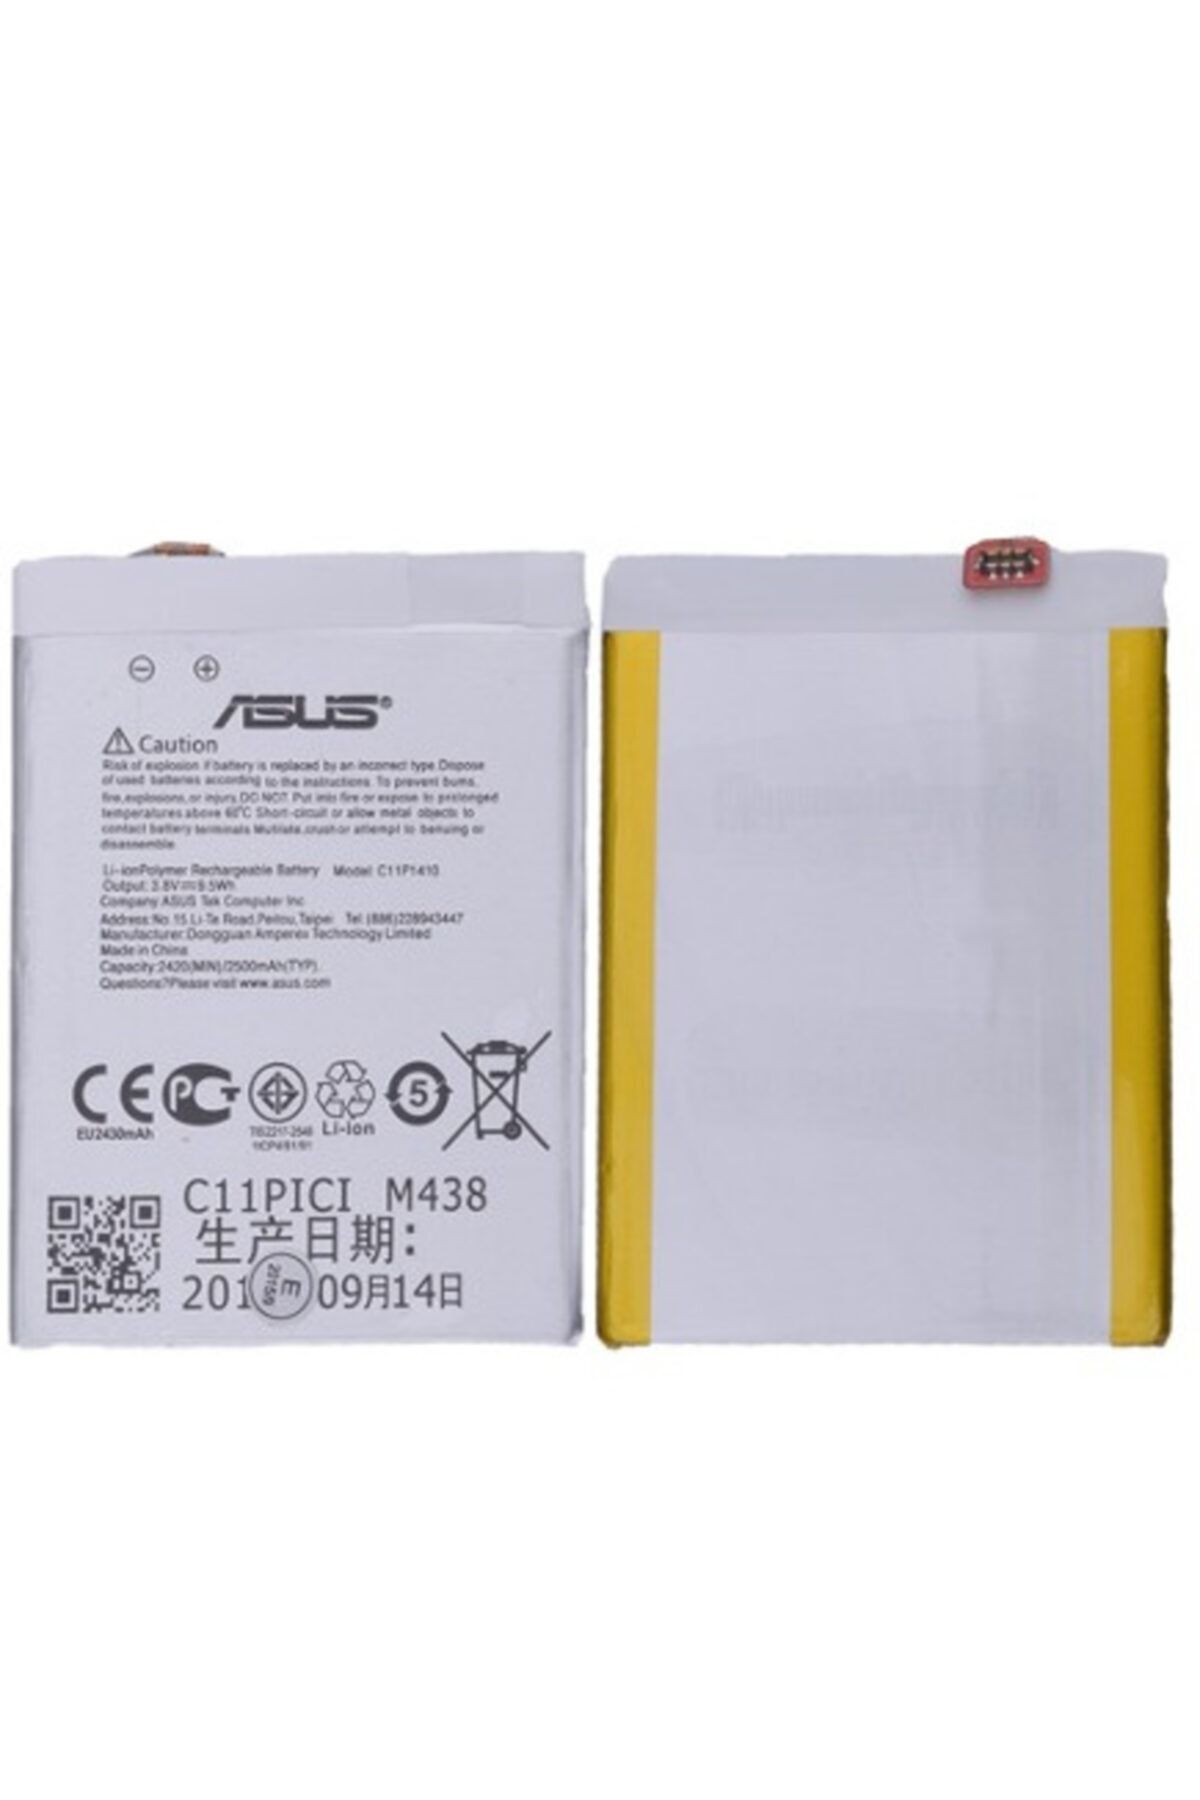 instatech Asus Zenfone 5 Lite (c11p1410) A502cg Batarya Pil